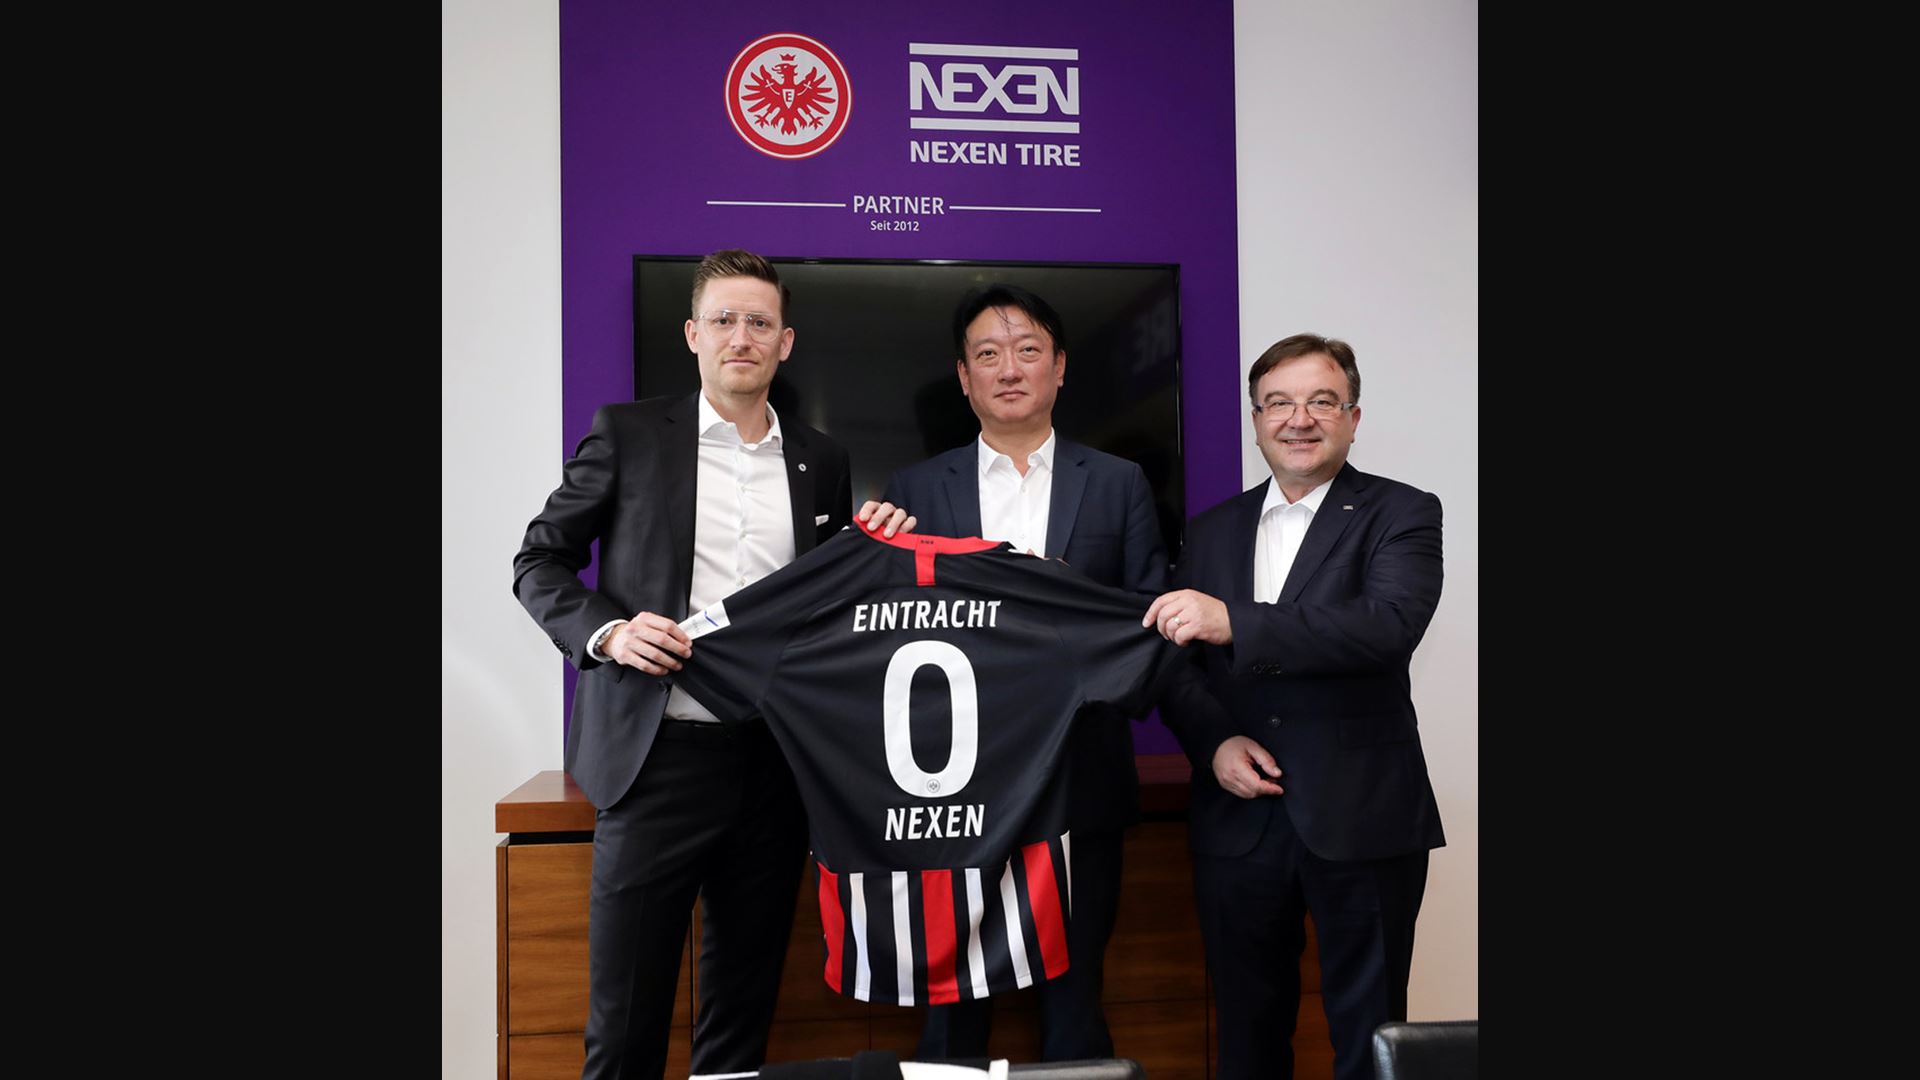 NEXEN TIRE extends sponsorship with Eintracht Frankfurt to 2021 2022 season